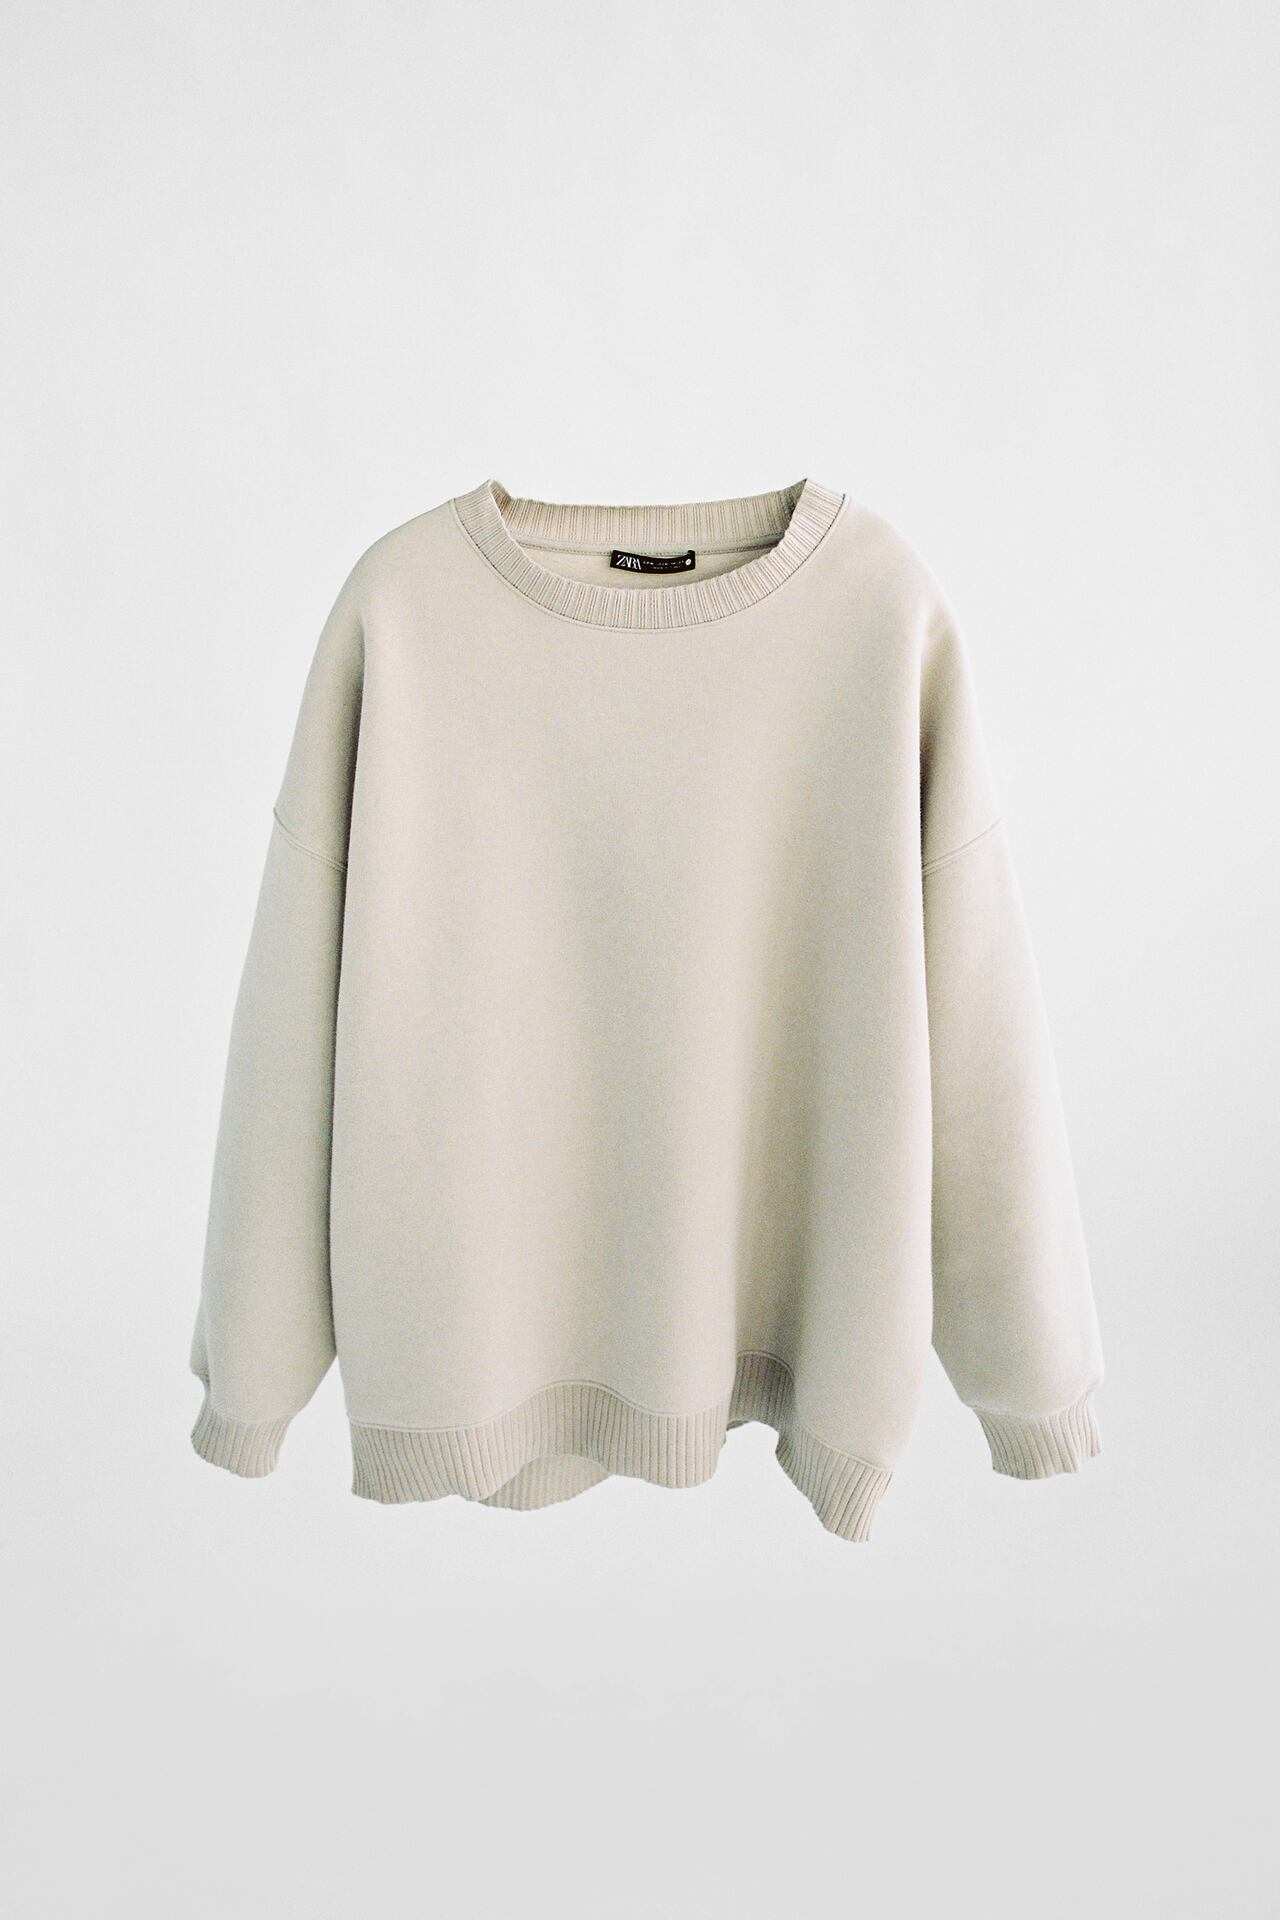 Sweatshirt oversize, Zara (22,95€)